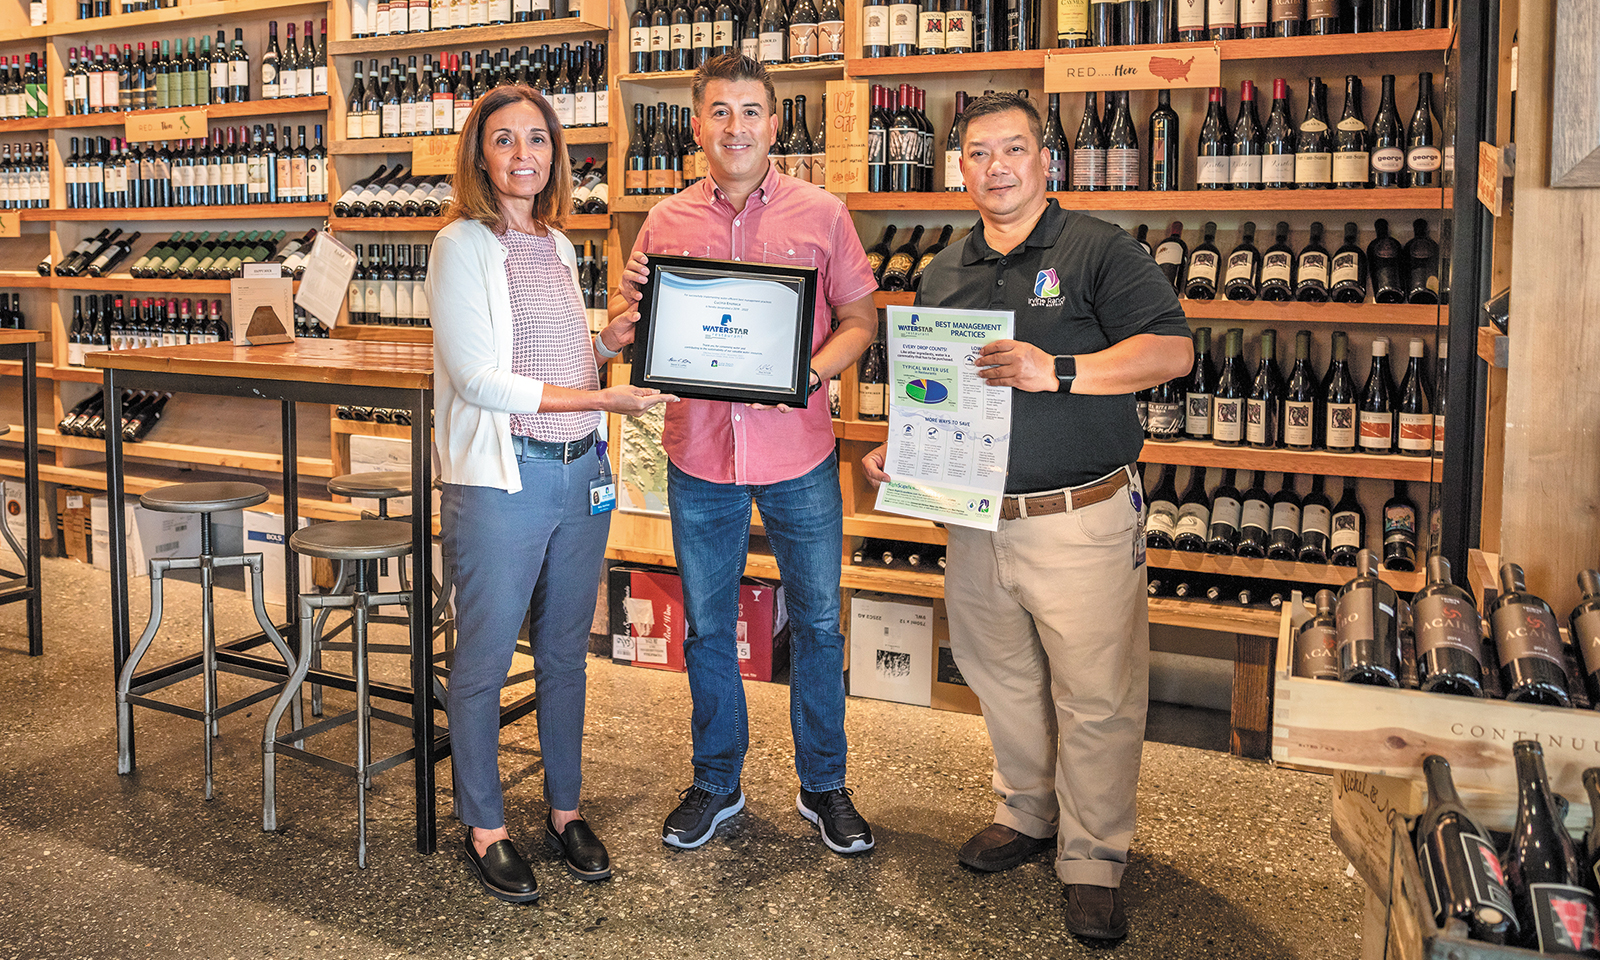 Cucina Enoteca restaurant honored for sustainability